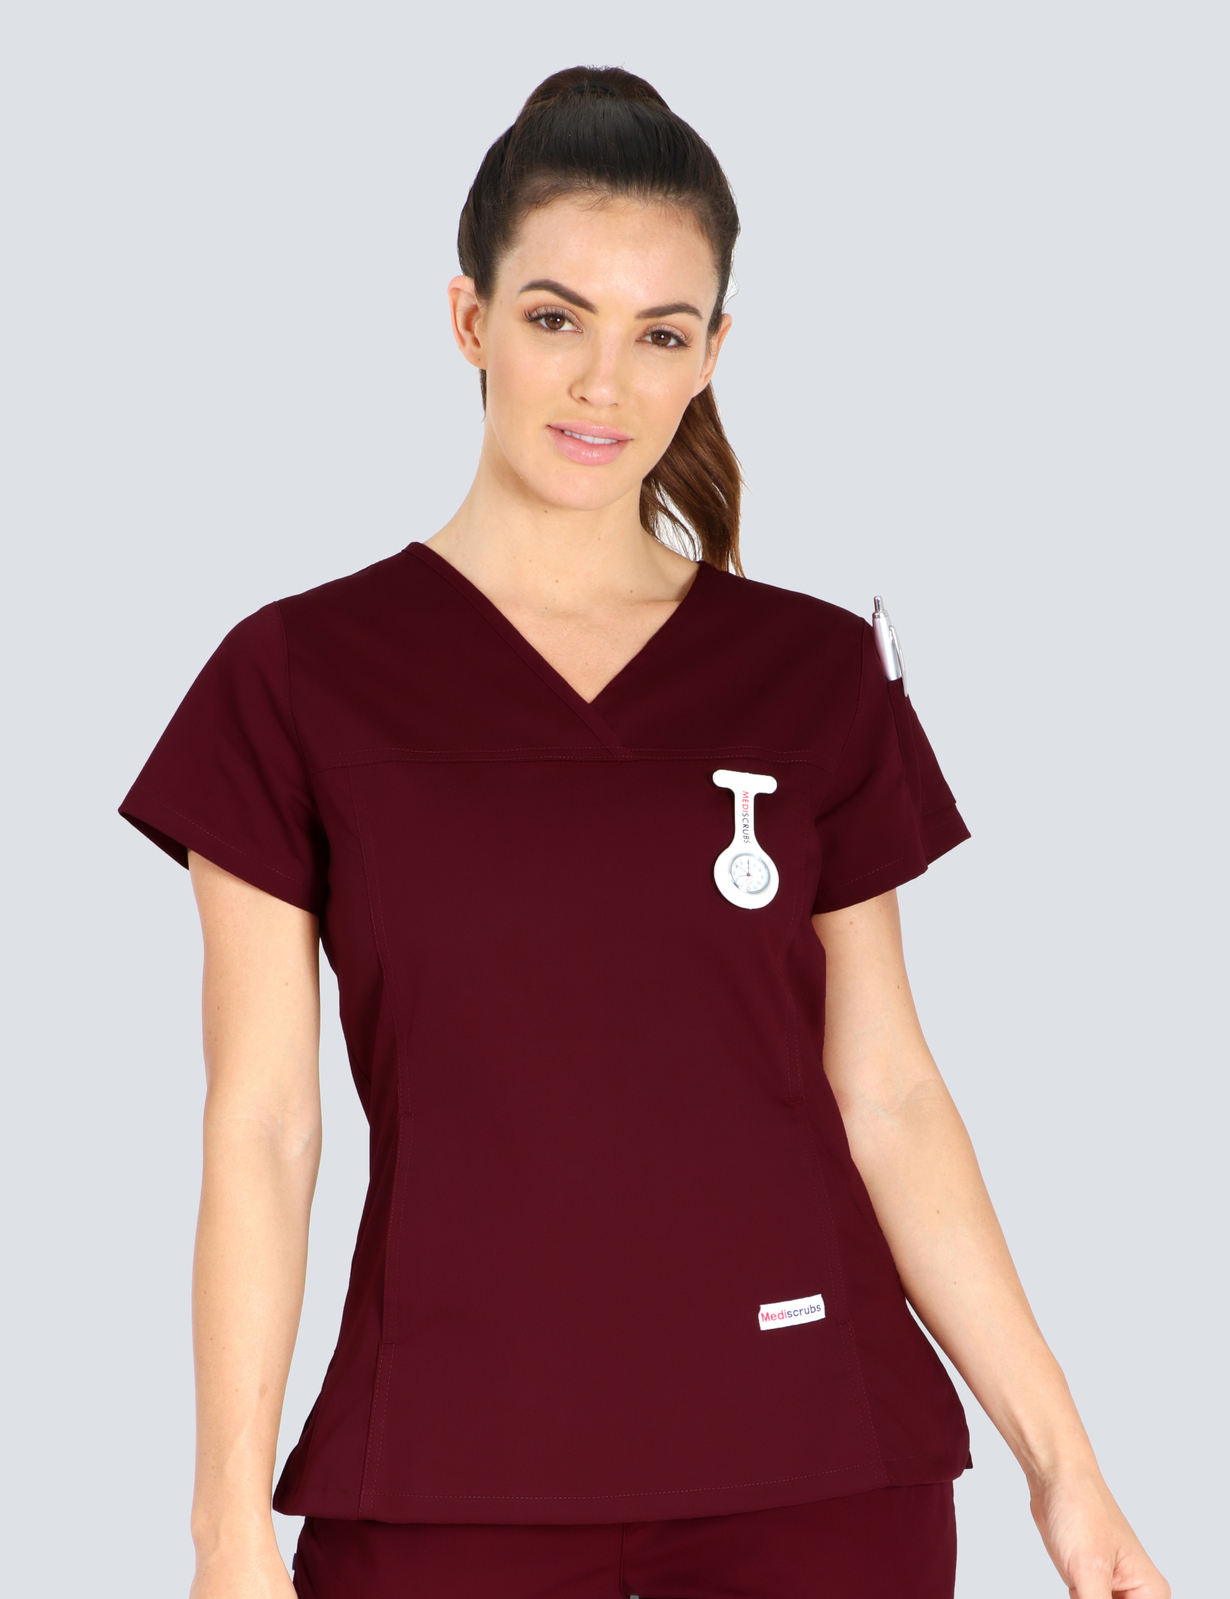 Queensland Children's Hospital Emergency Department Clinical Nurse  Uniform Top Bundle  (Women's Fit Top in Black  incl Logos)